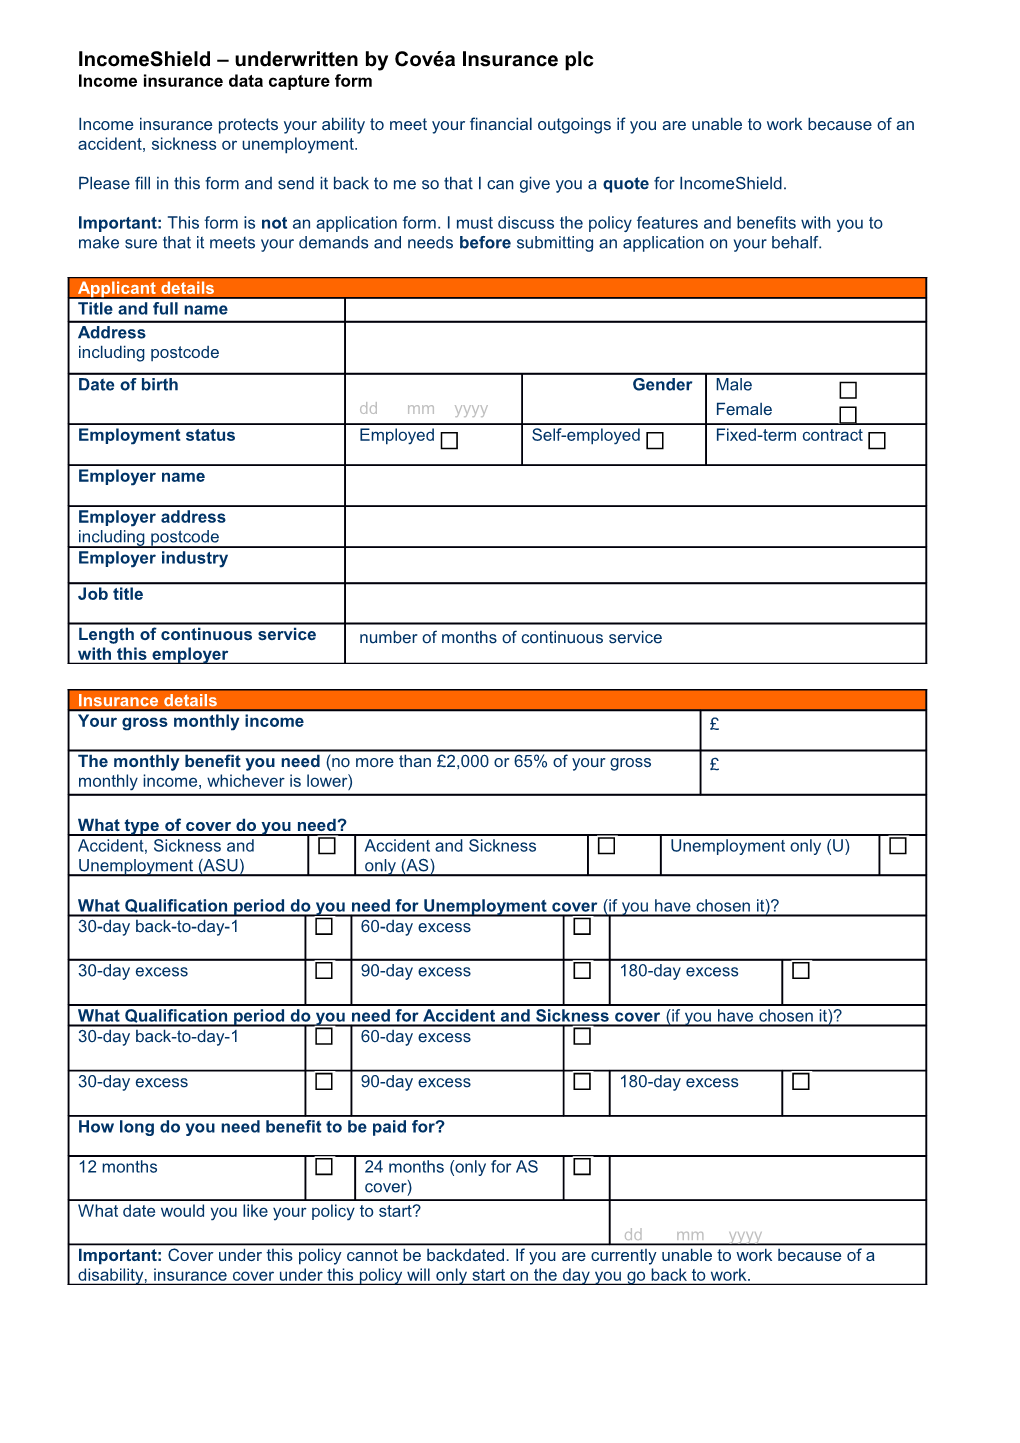 Incomeshield Underwritten by Covéa Insurance Plc Income Insurance Data Capture Form